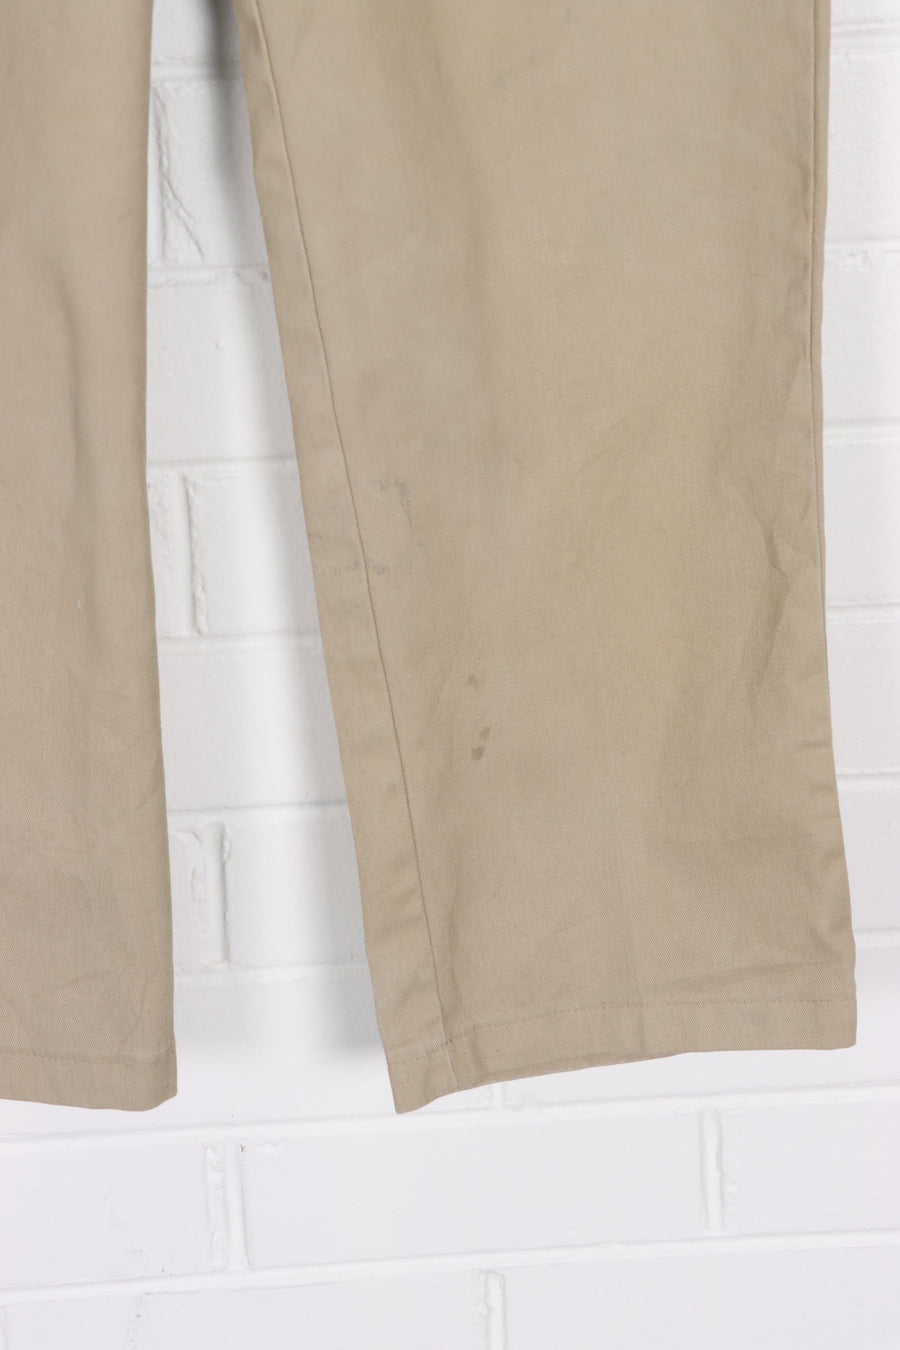 DICKIES 874 Khaki Multi Pocket Workwear Pants (34x30)